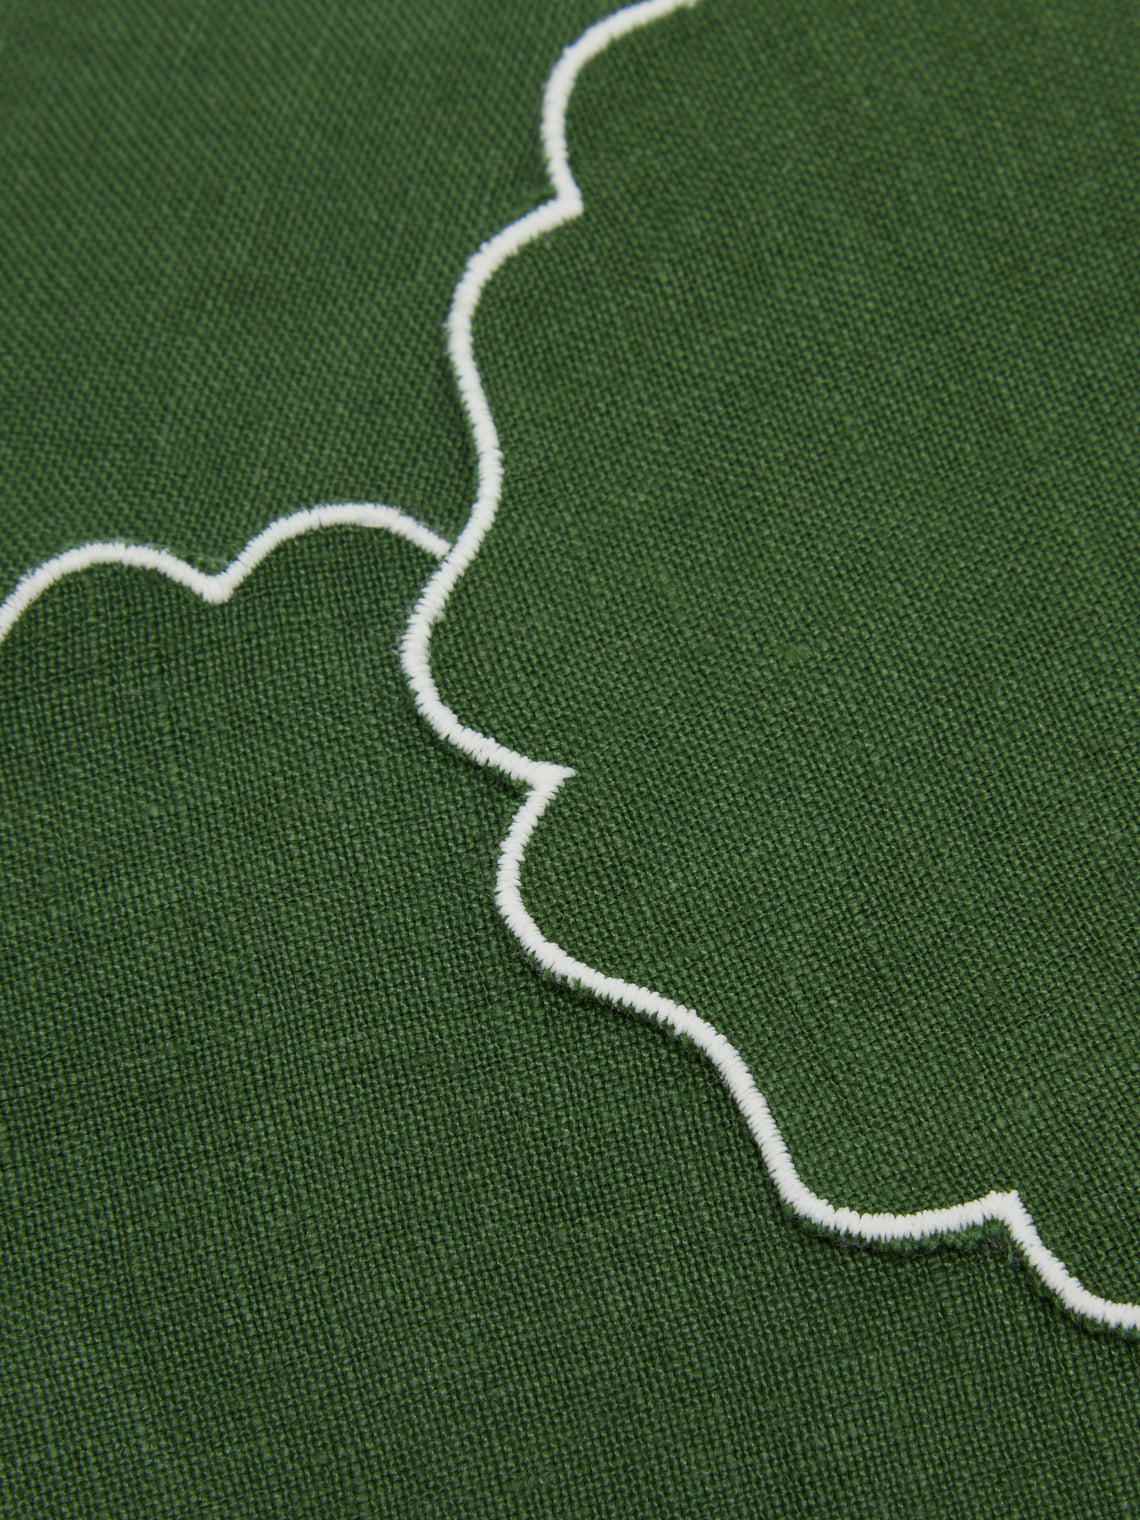 Los Encajeros - Alhambra Embroidered Linen Coaster (Set of 6) - Green - ABASK